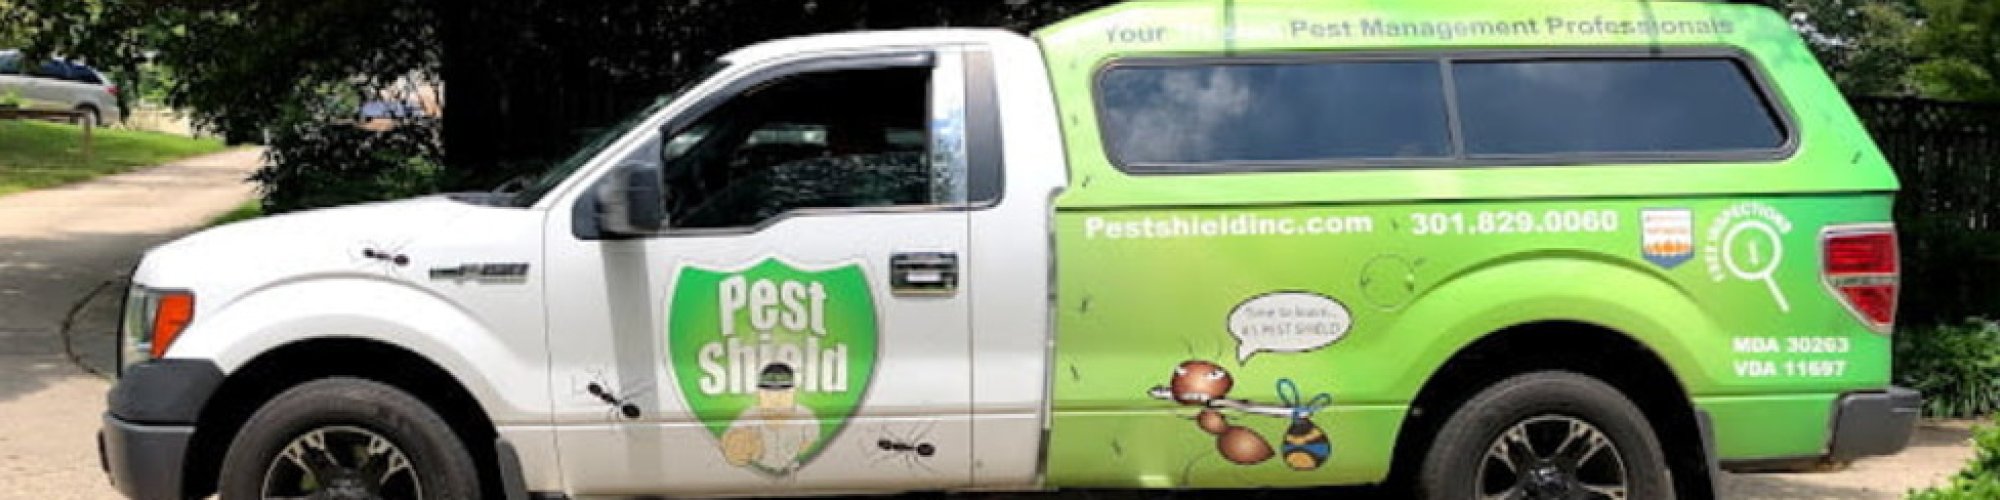 Pest Shield Inc.